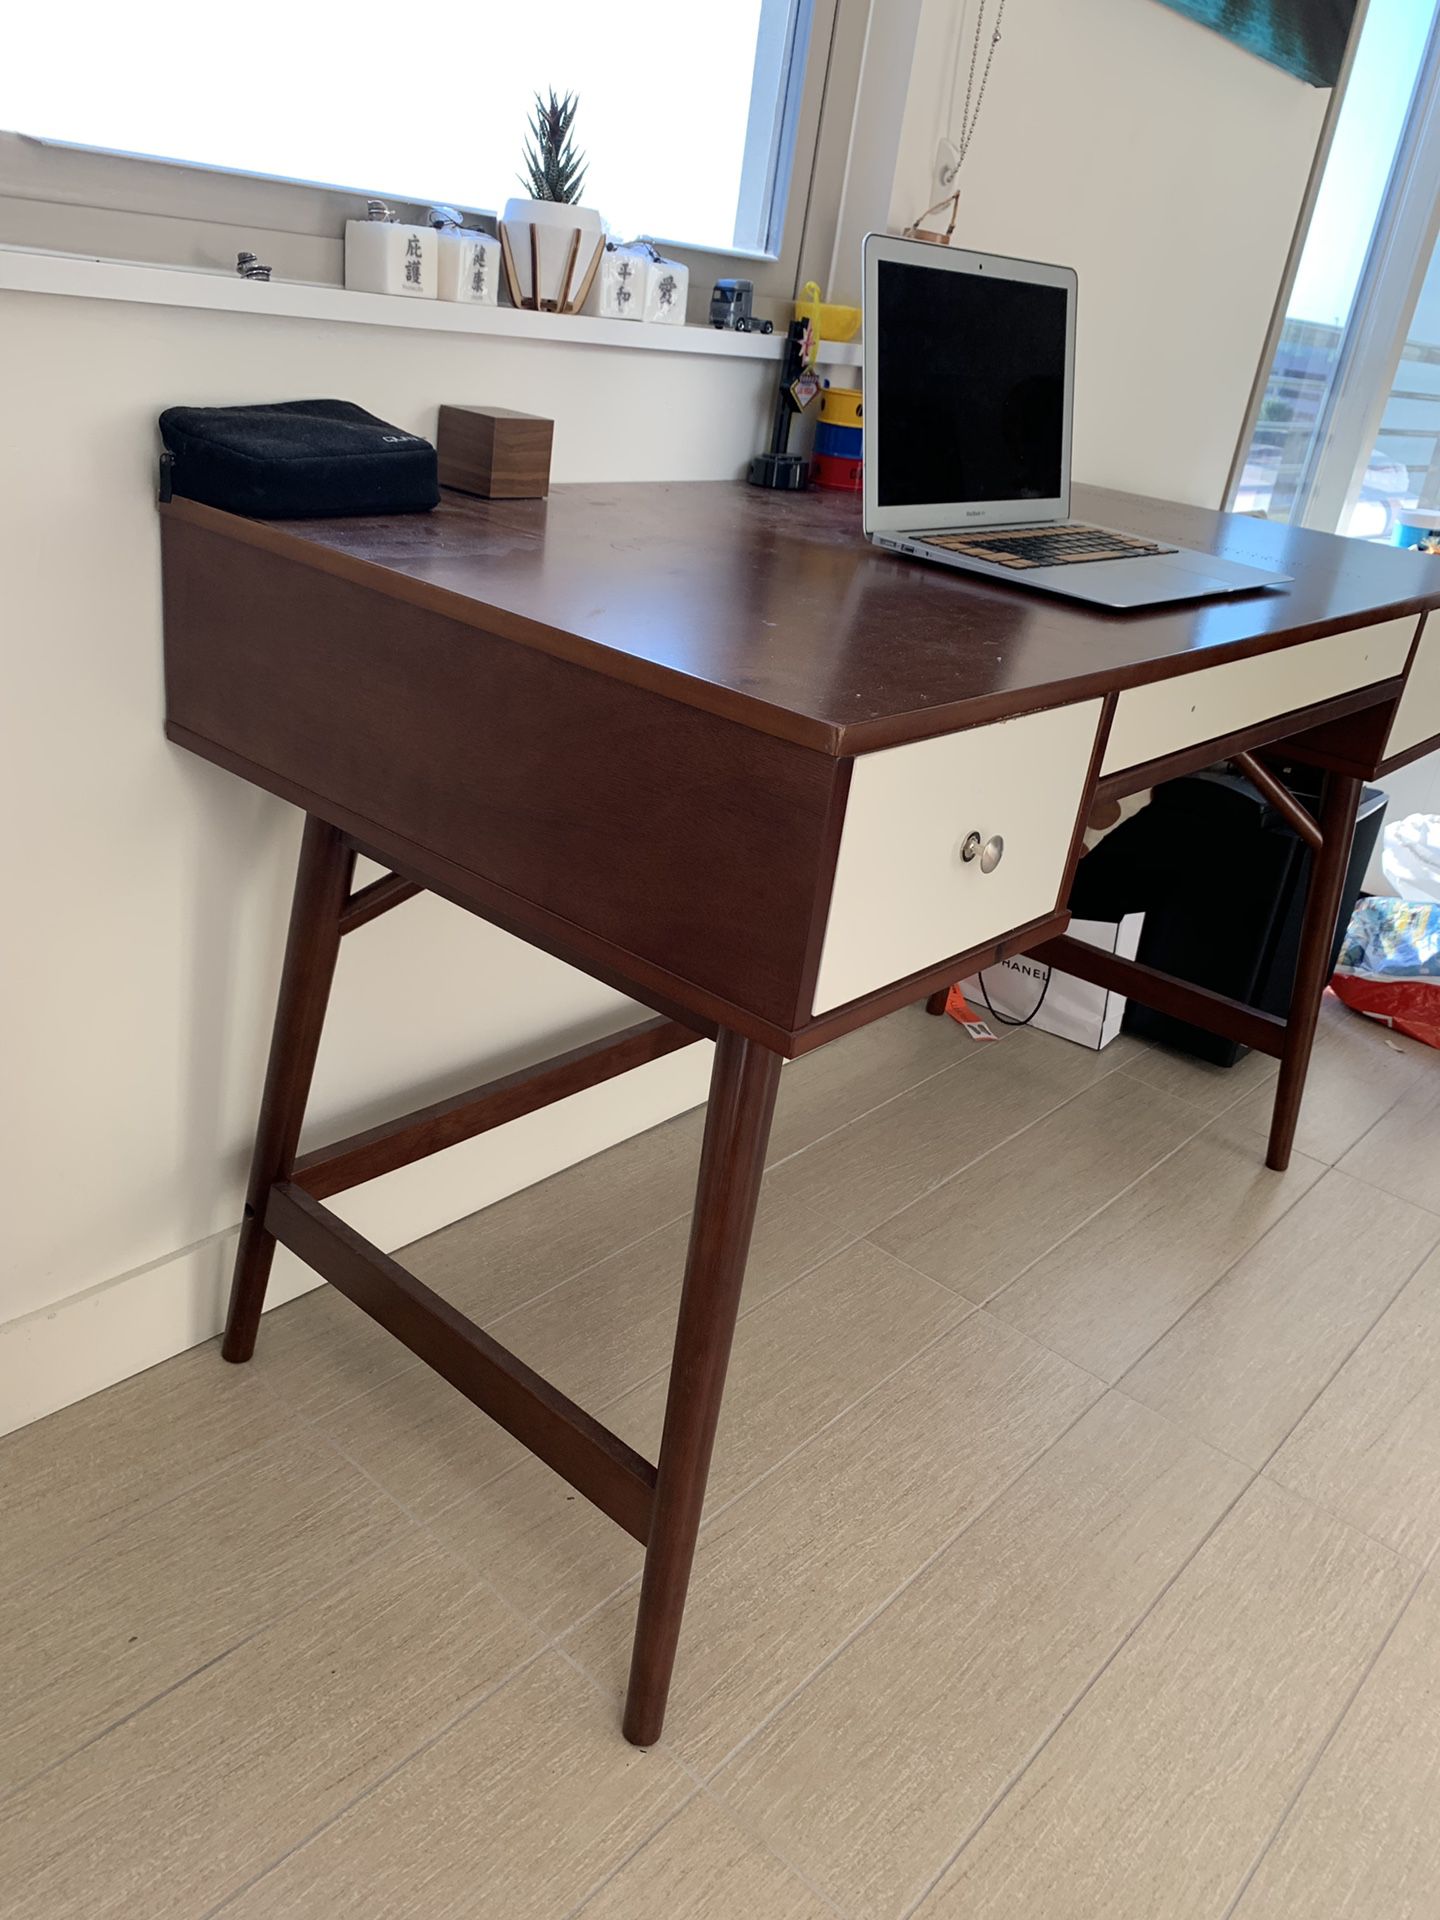 Minimalist desk, beautiful office or home desk